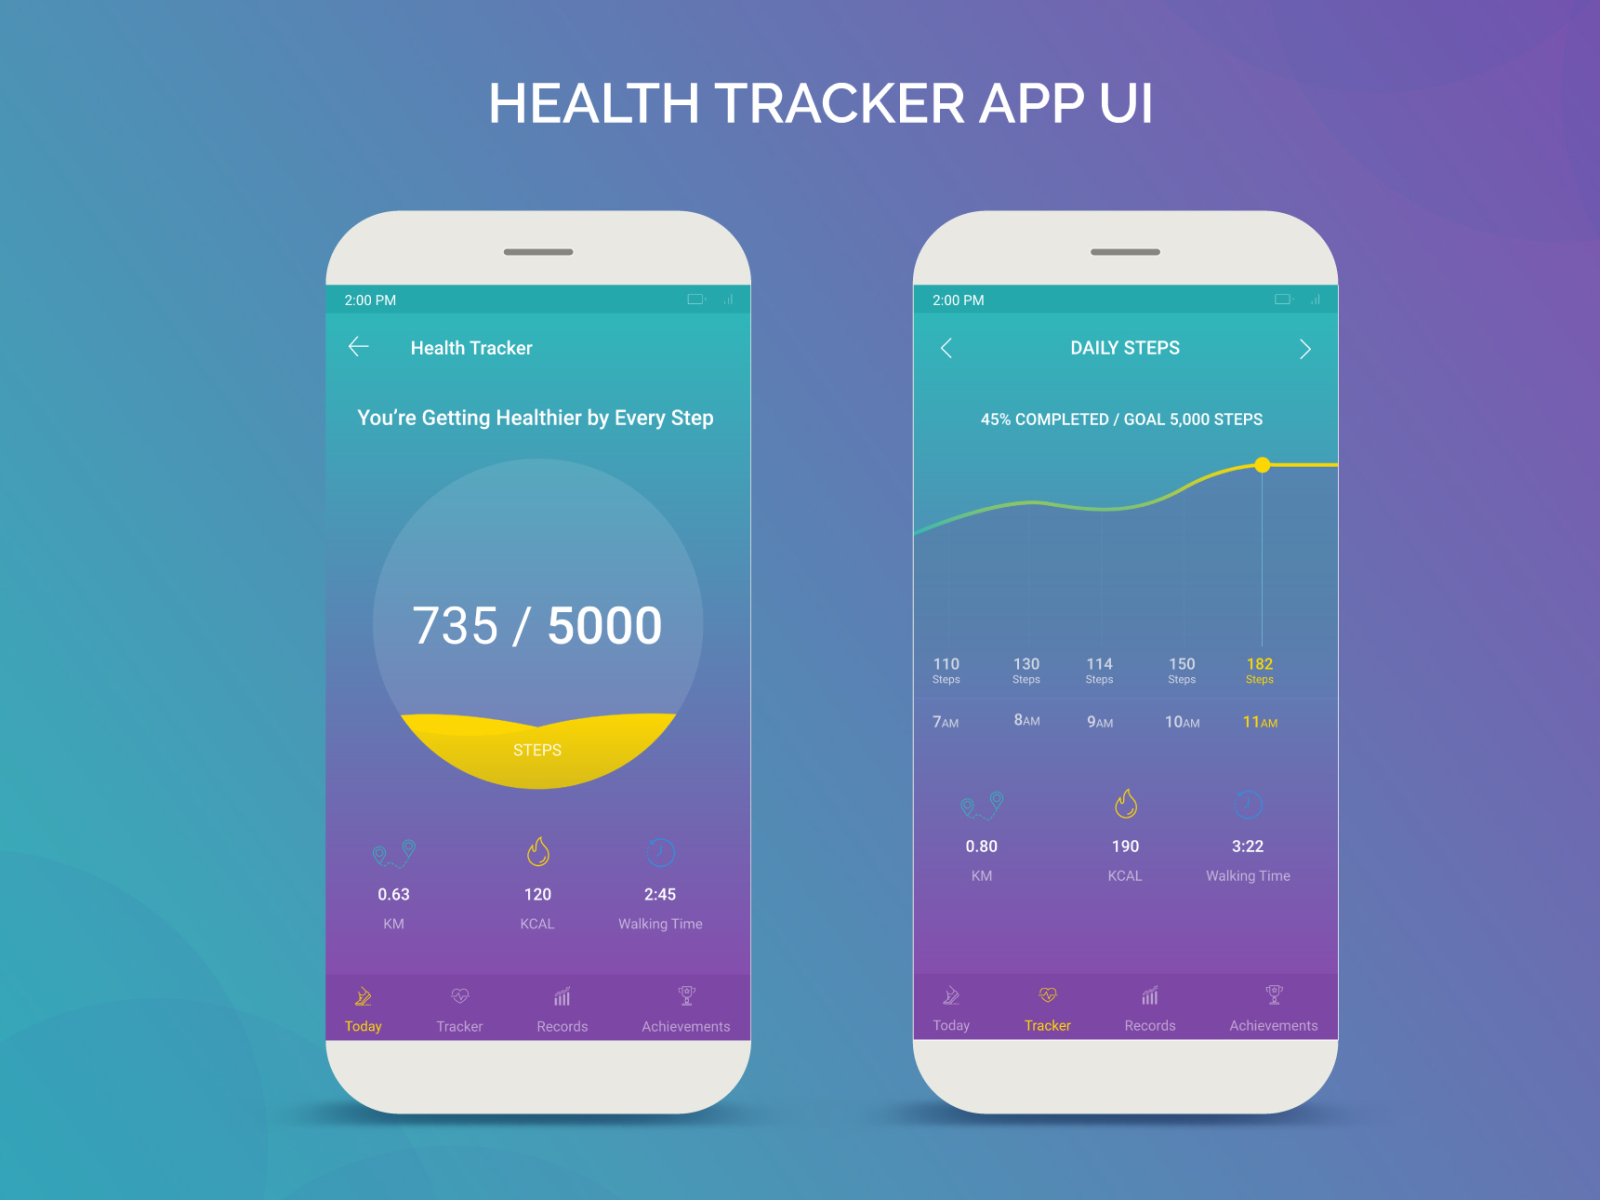 health tracker app ui by Taher w on Dribbble